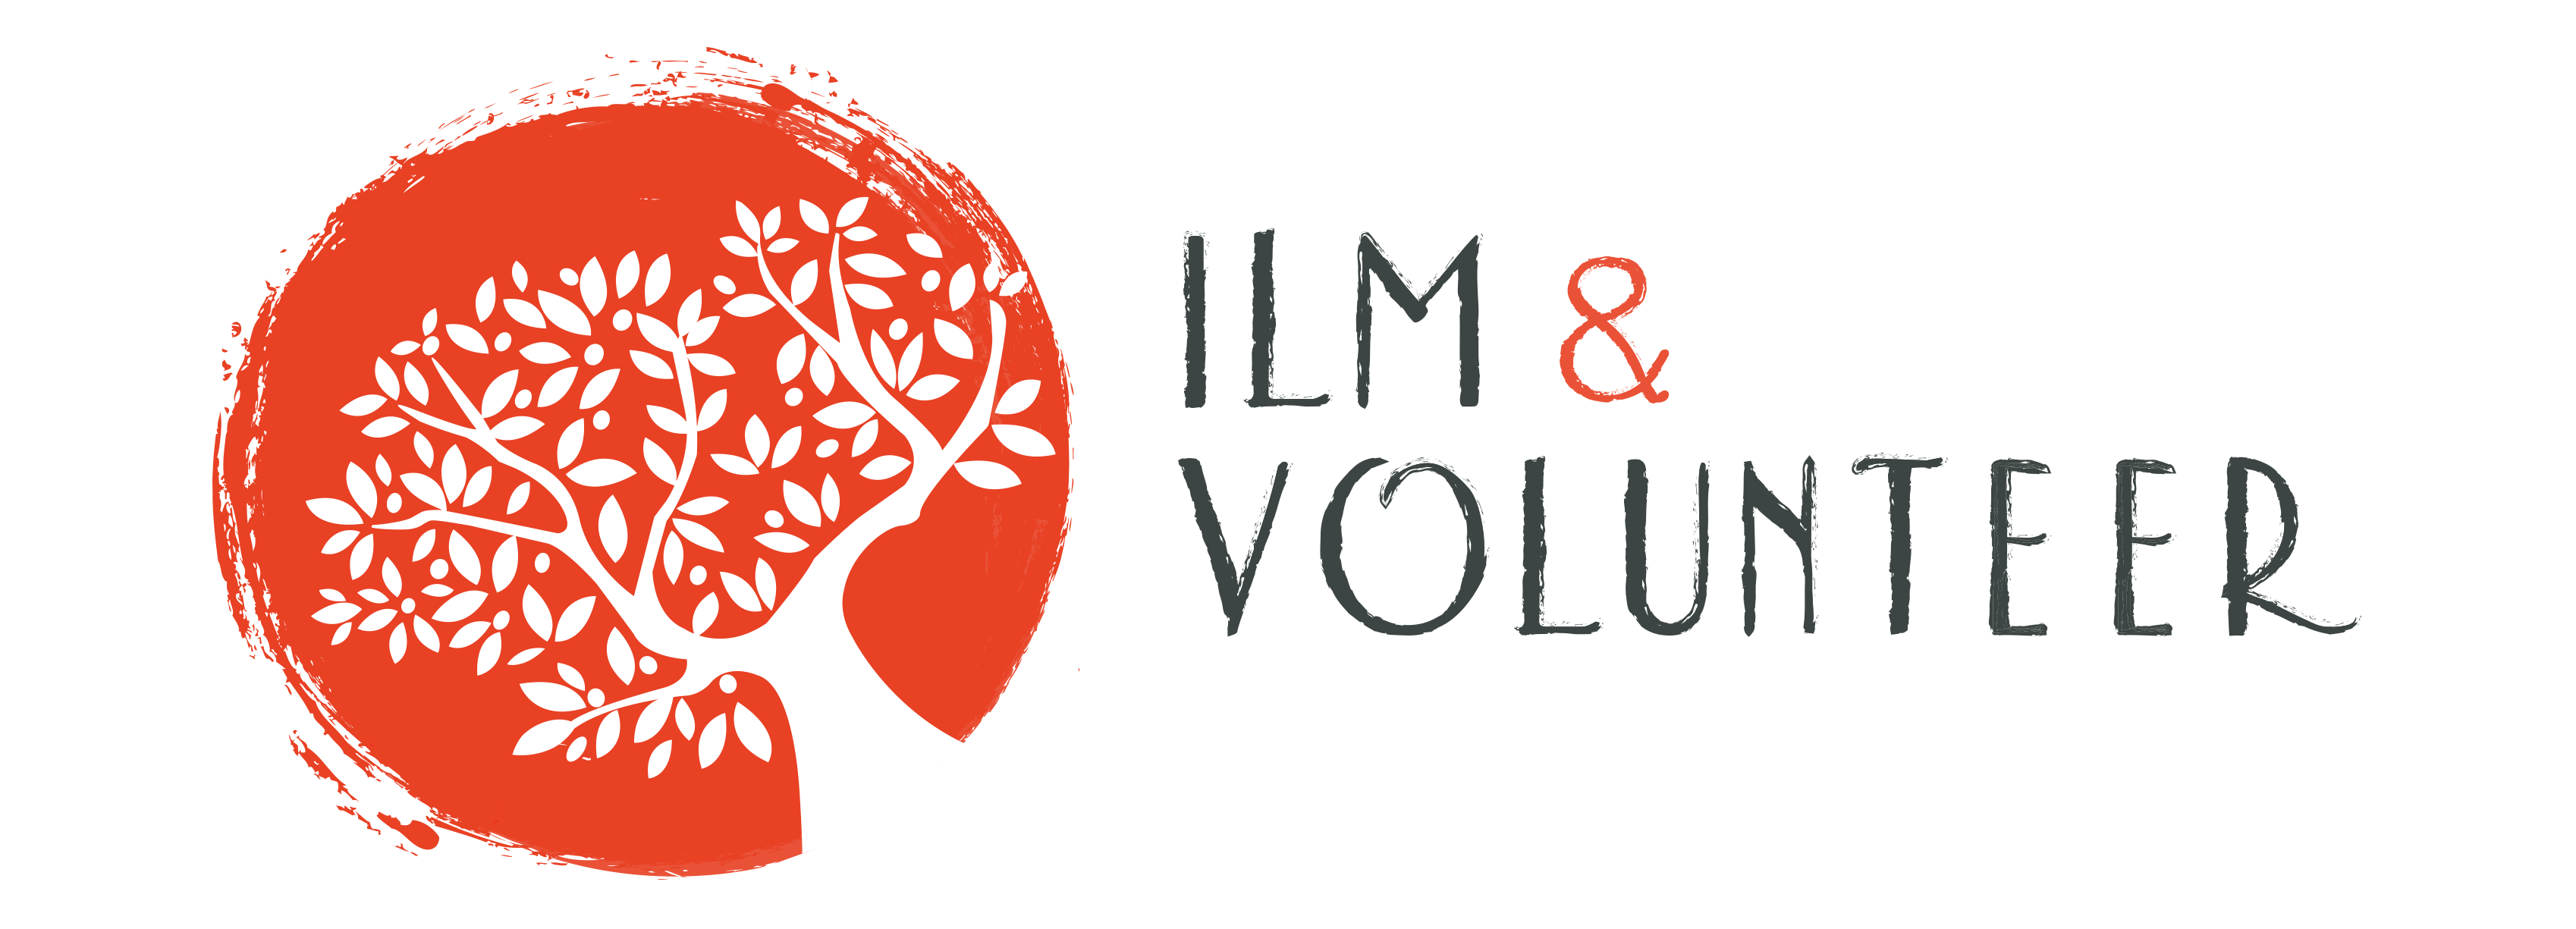 ILM Logo - ILM & VOLUNTEER – Volunteer for Ilm